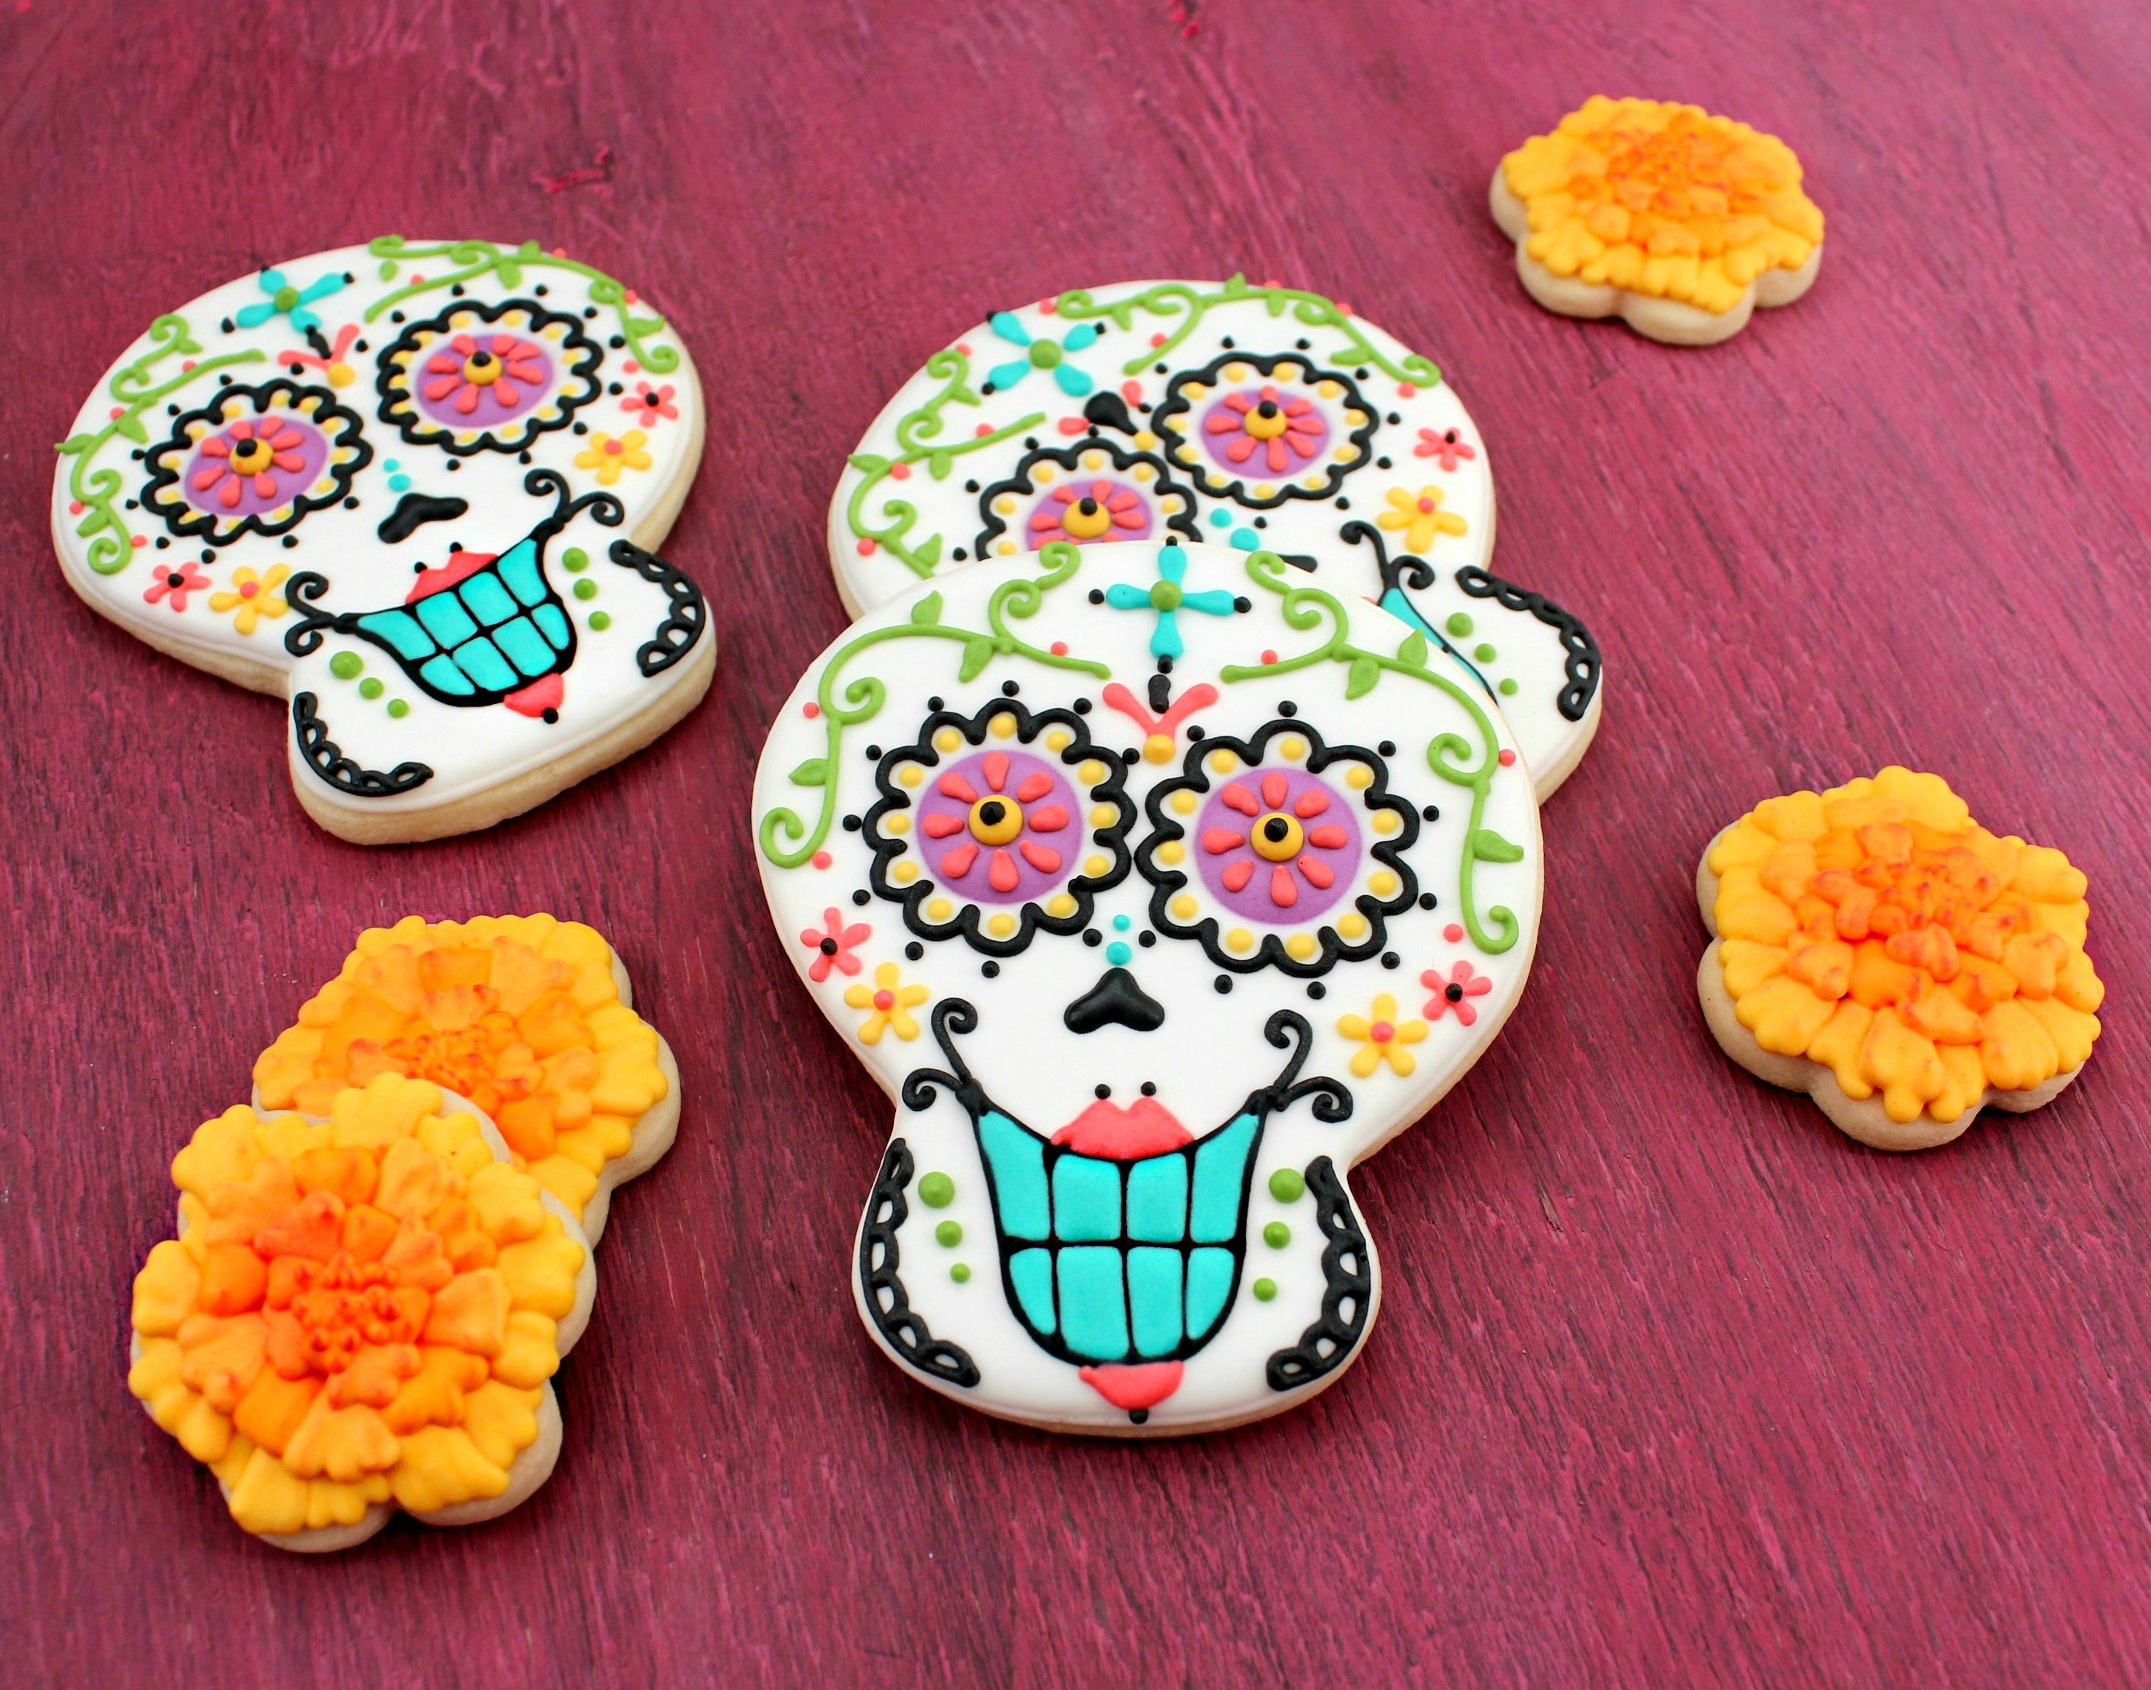 El Dia De Los Muertos Day of the Dead Cookies - The Sweet Adventures